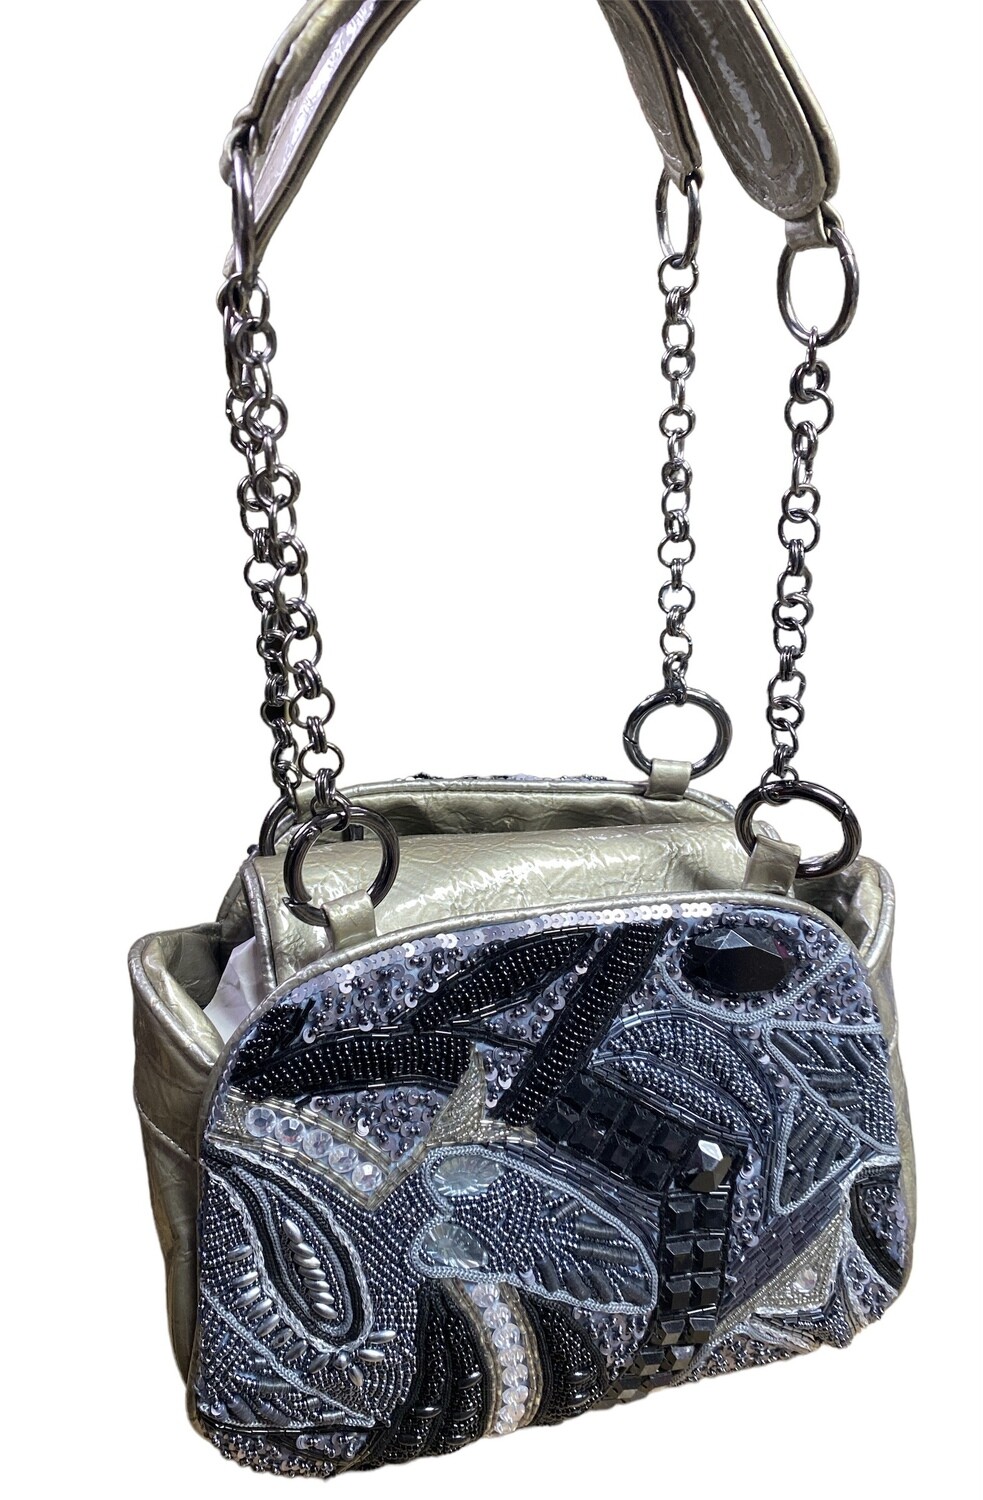 CHICOS Bejeweled Patent Leather Handbag